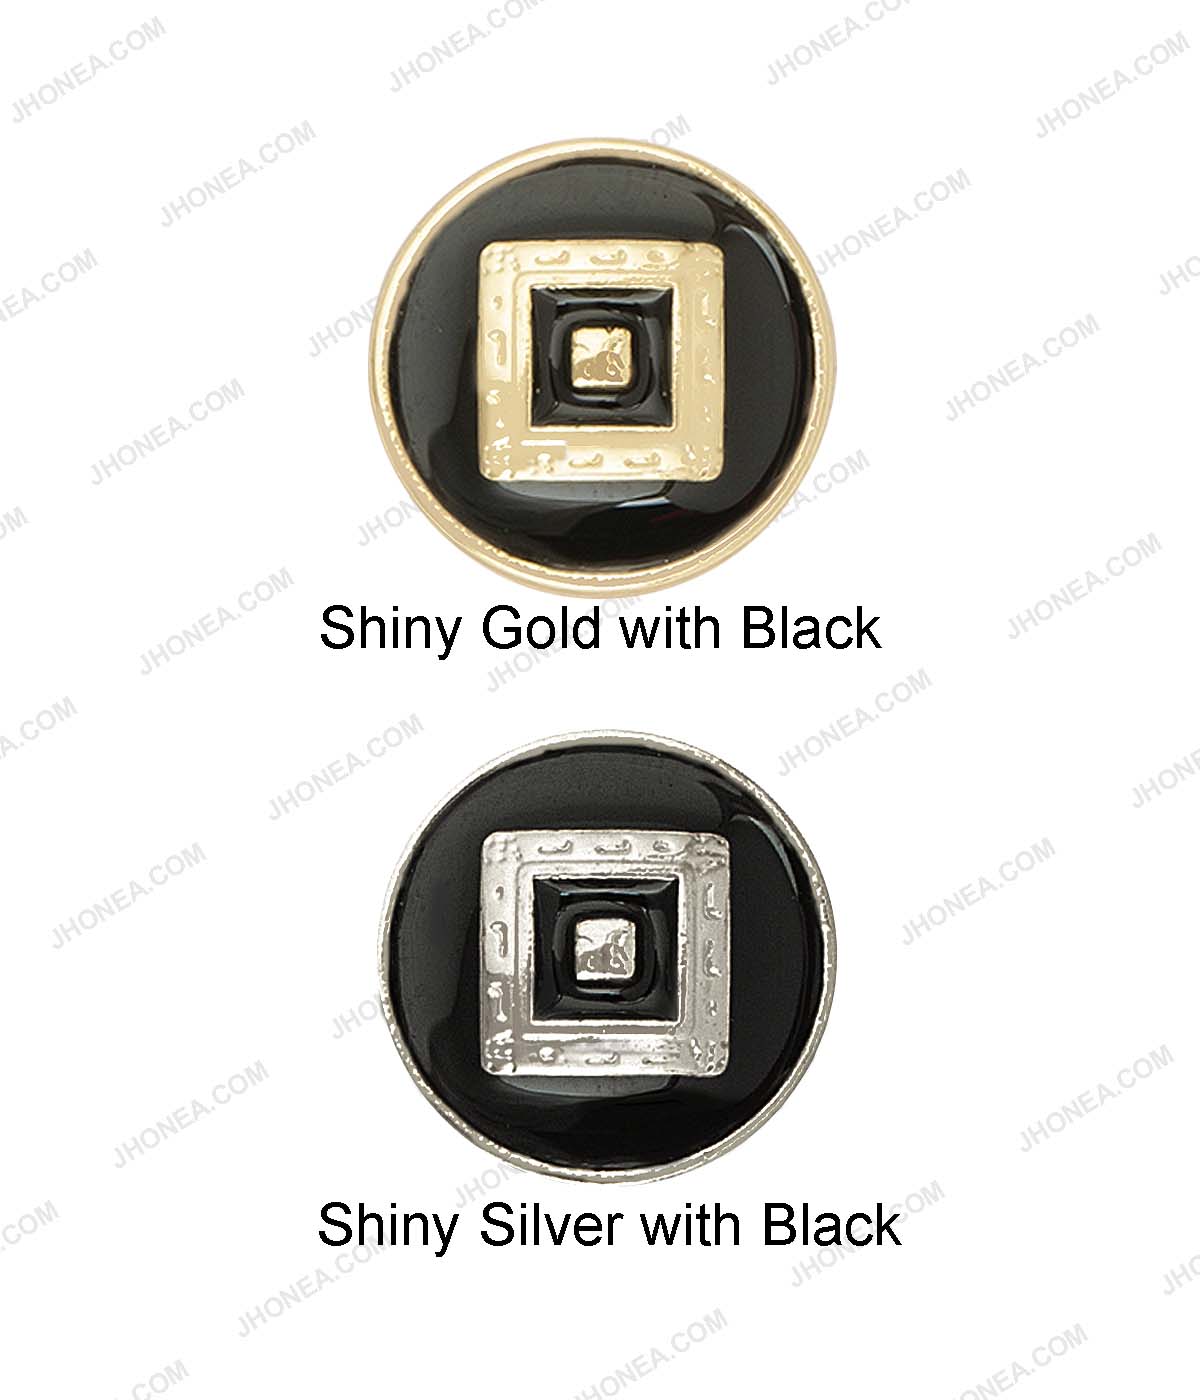 Shiny Gold & Shiny Silver Black Enamel Royal Men's Shirt Buttons